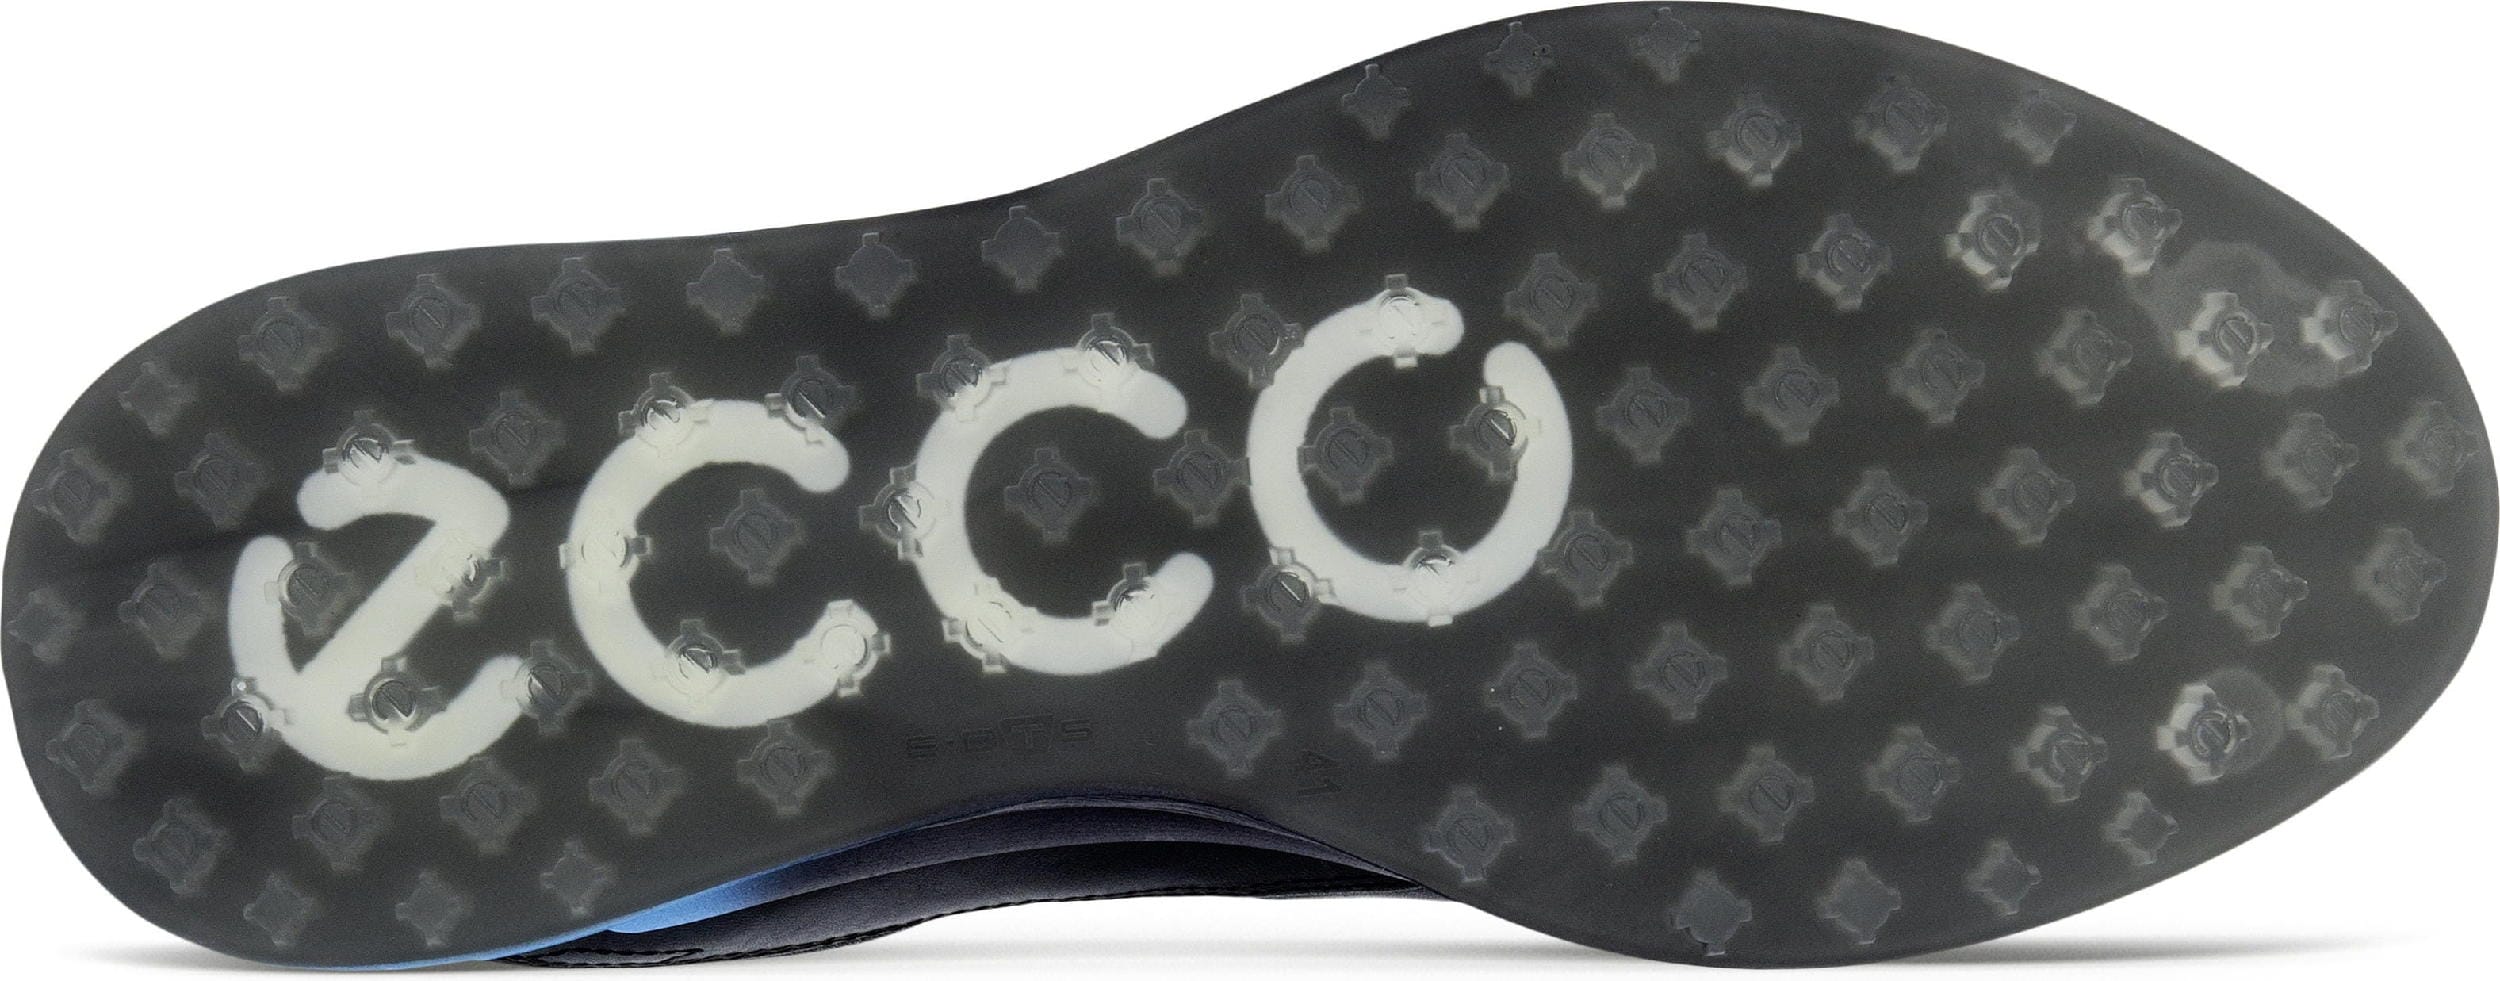 ECCO Golf S-Three Gore-Tex Golfschuh, black